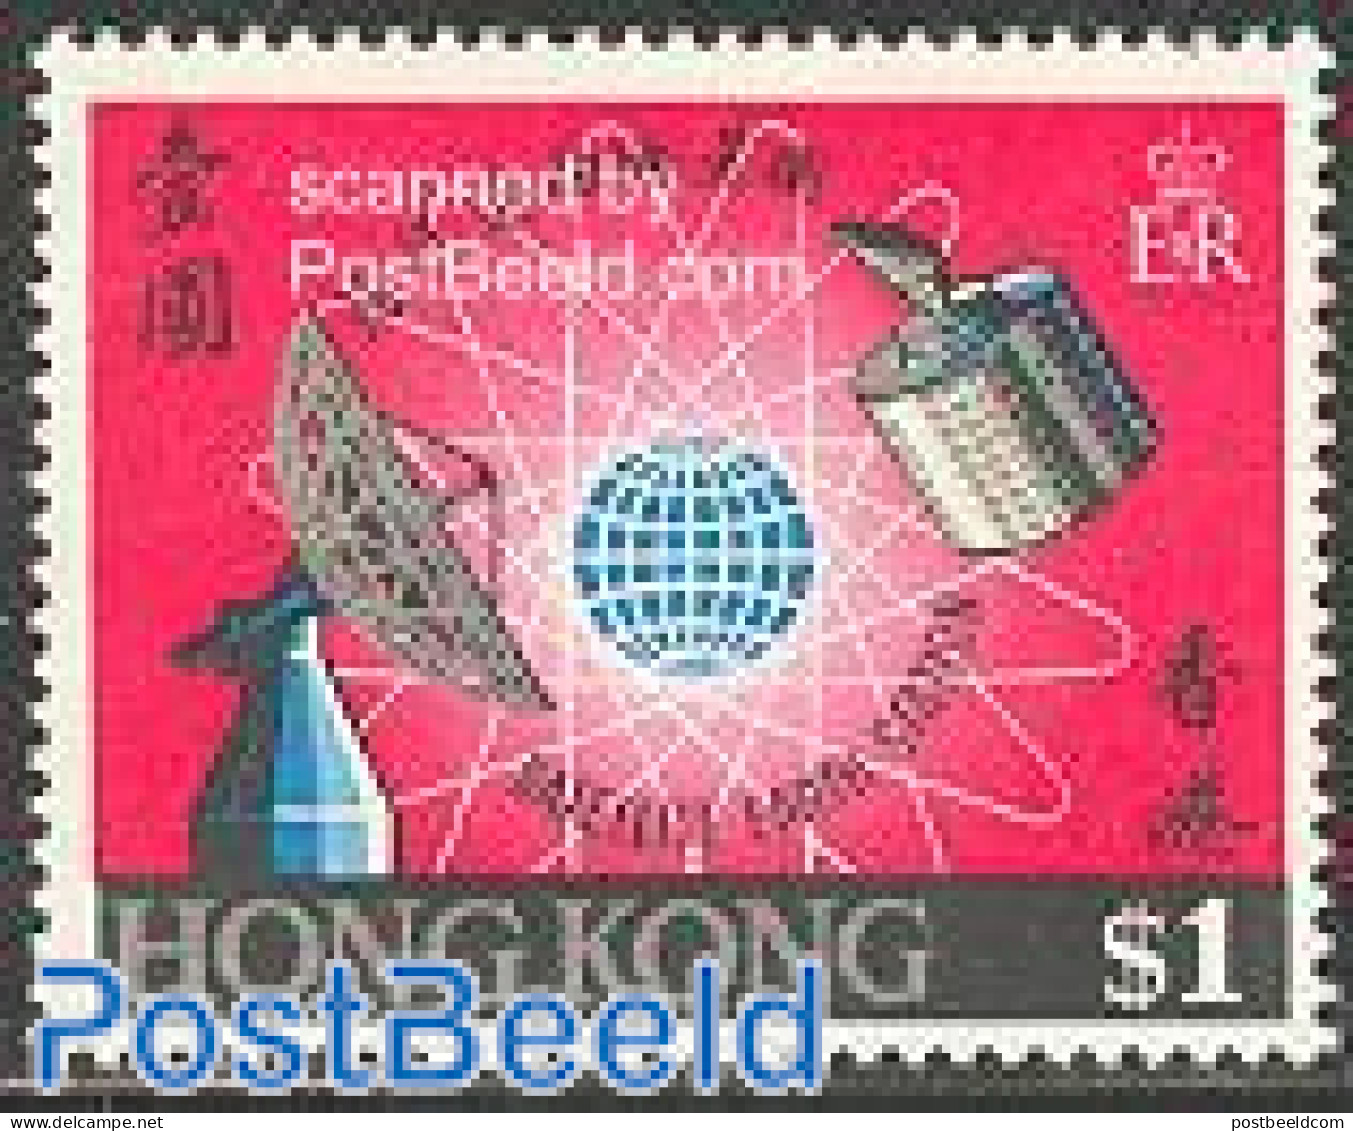 Hong Kong 1969 Satellite Ground Station 1v, Mint NH, Science - Transport - Telecommunication - Space Exploration - Ungebraucht